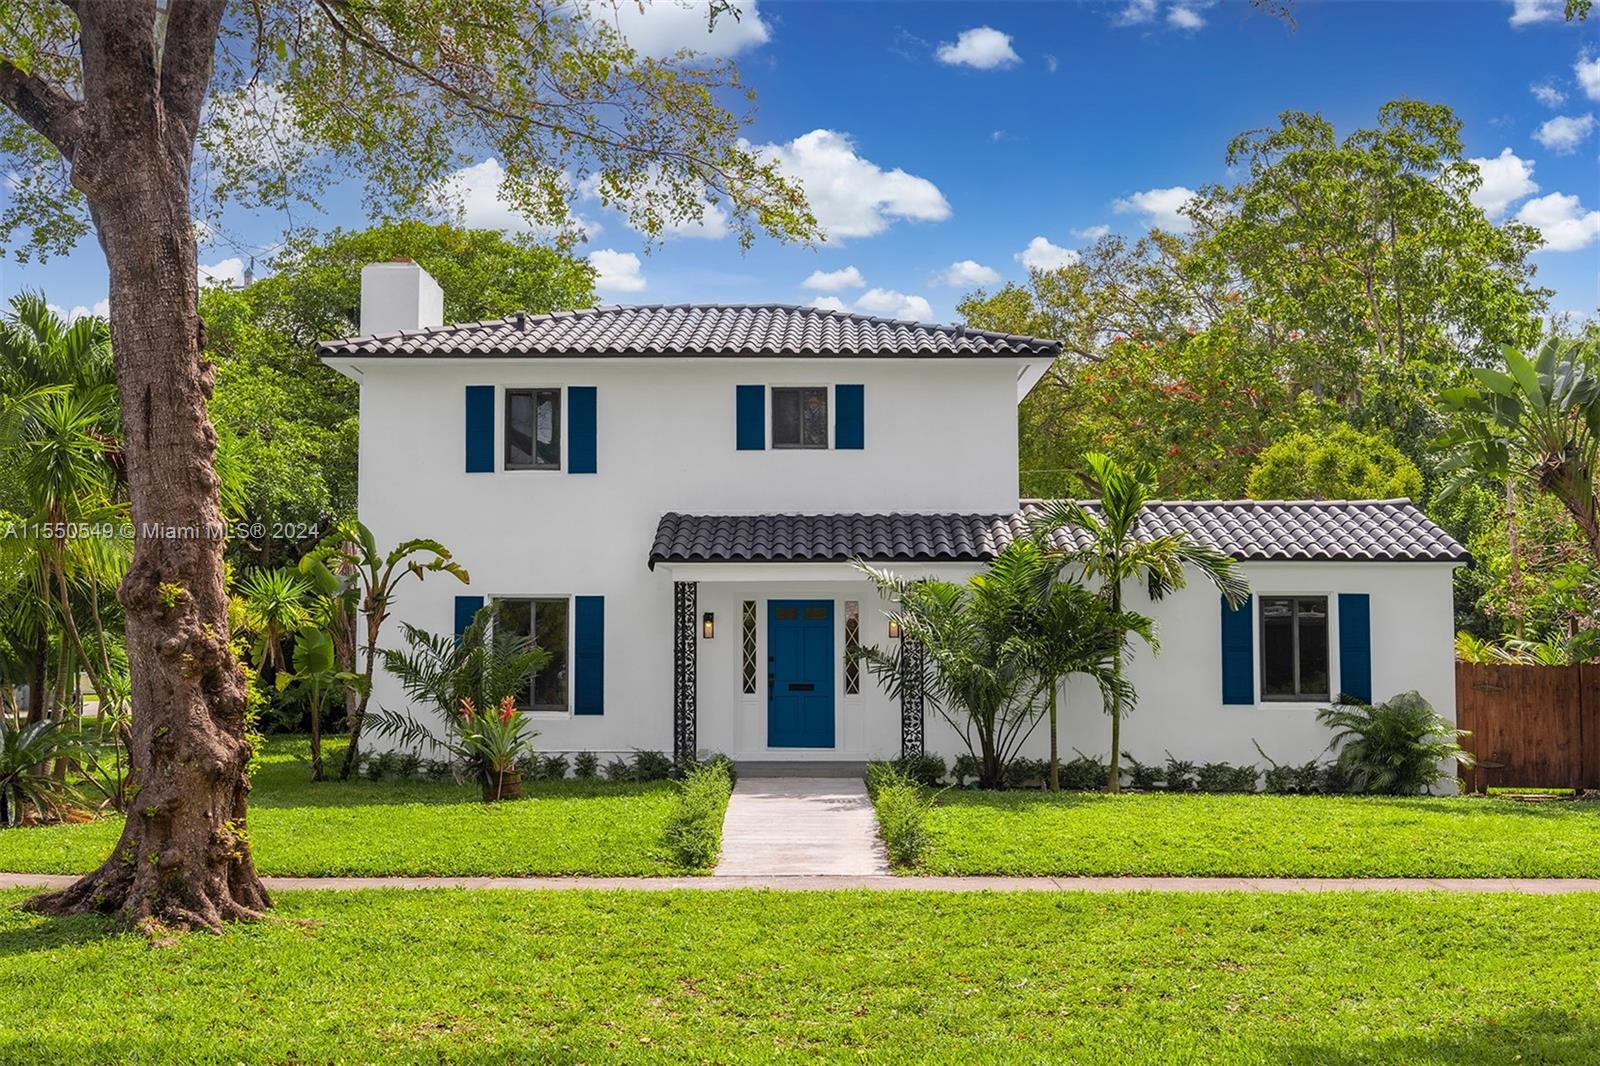 Property for Sale at 390 Ne 93rd St, Miami Shores, Miami-Dade County, Florida - Bedrooms: 4 
Bathrooms: 5  - $2,975,000